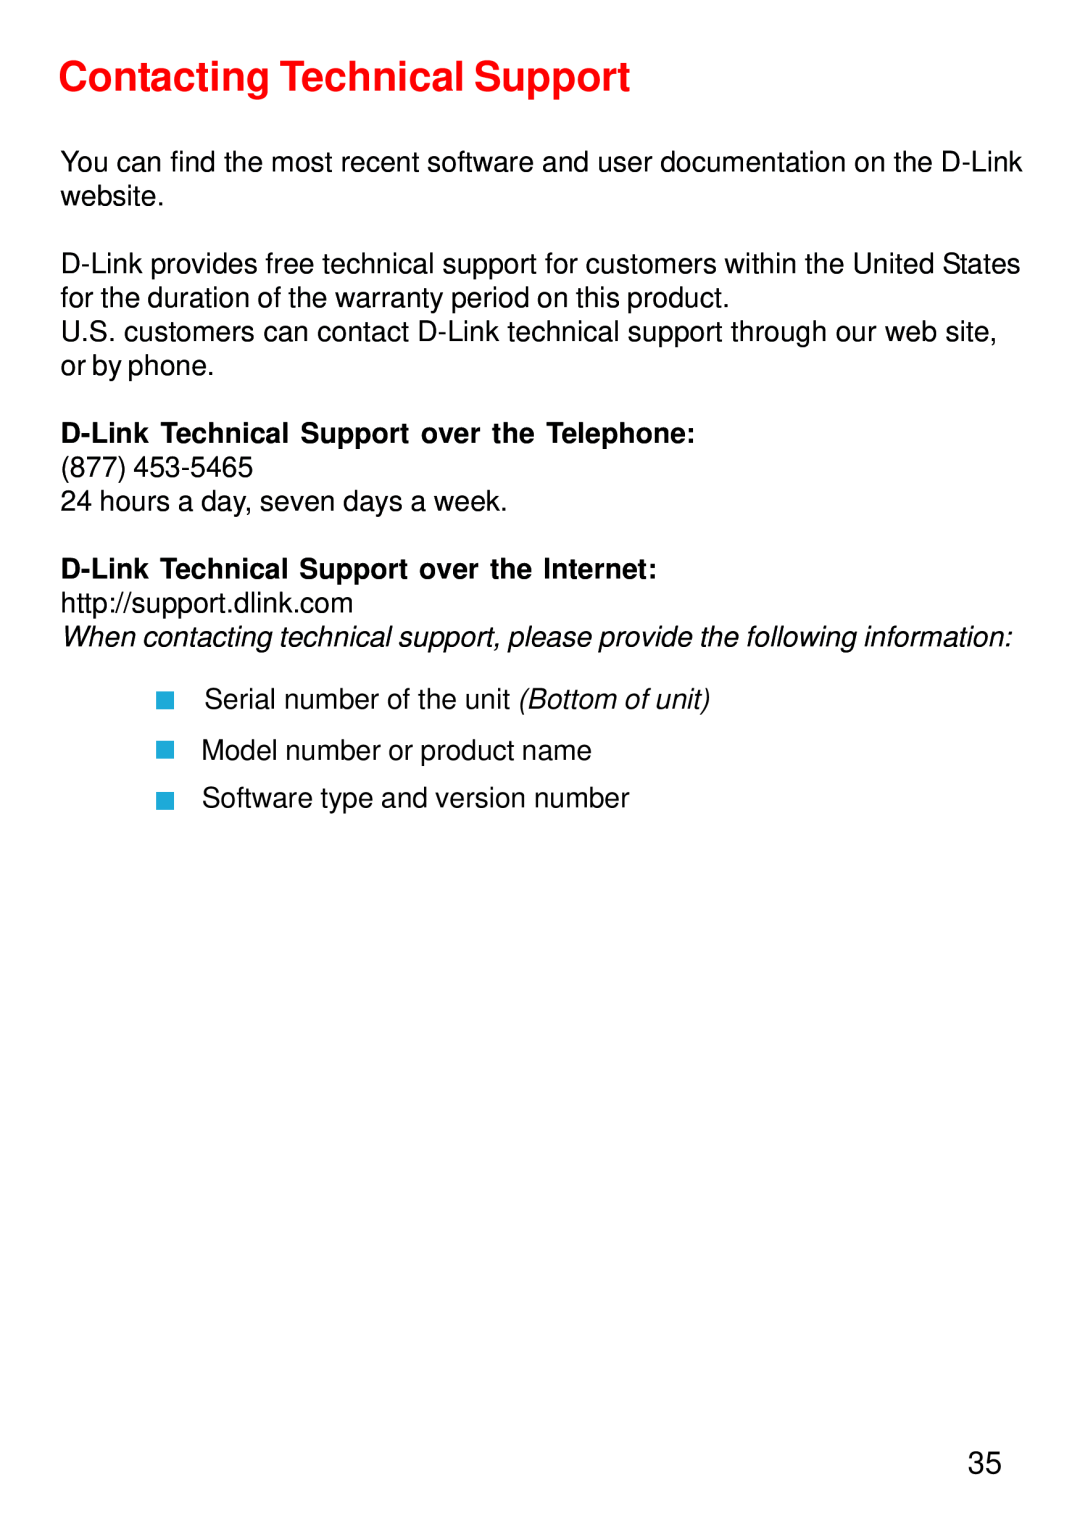 D-Link DCM-202 manual Contacting Technical Support, D-Link Technical Support over the Telephone 877 